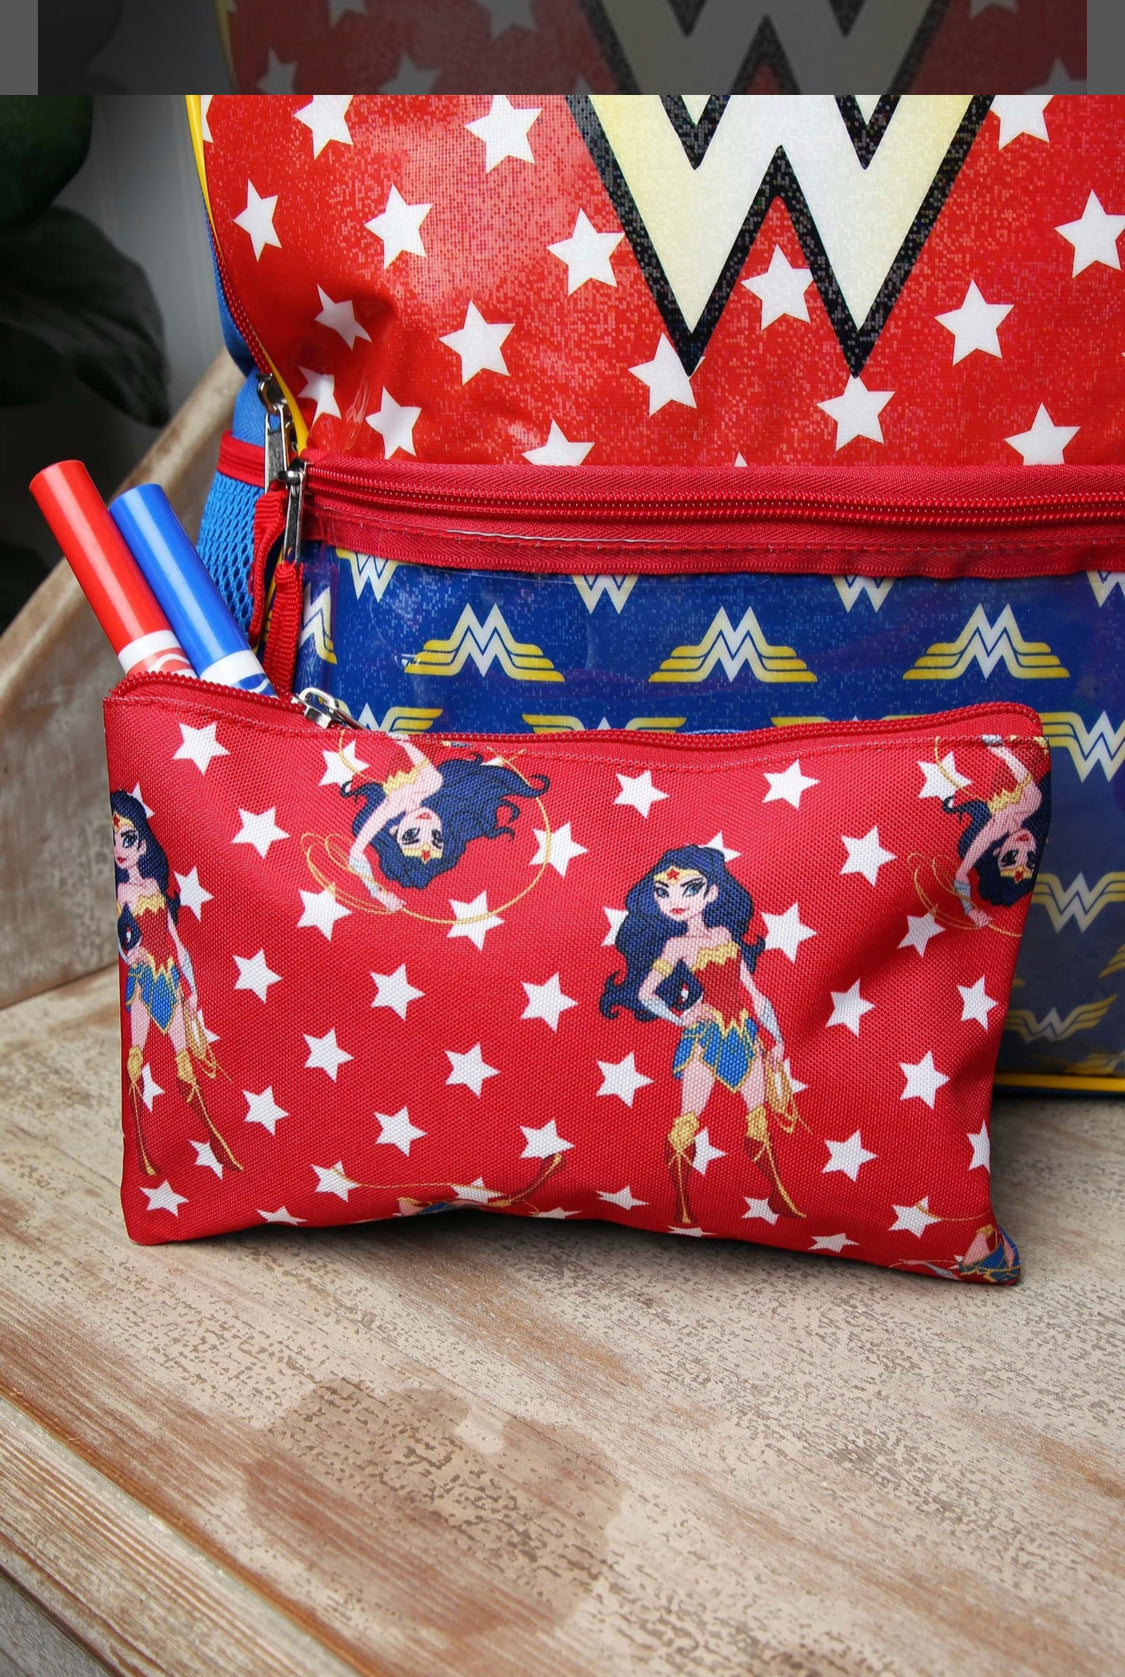 Wonder woman  Backpack Set